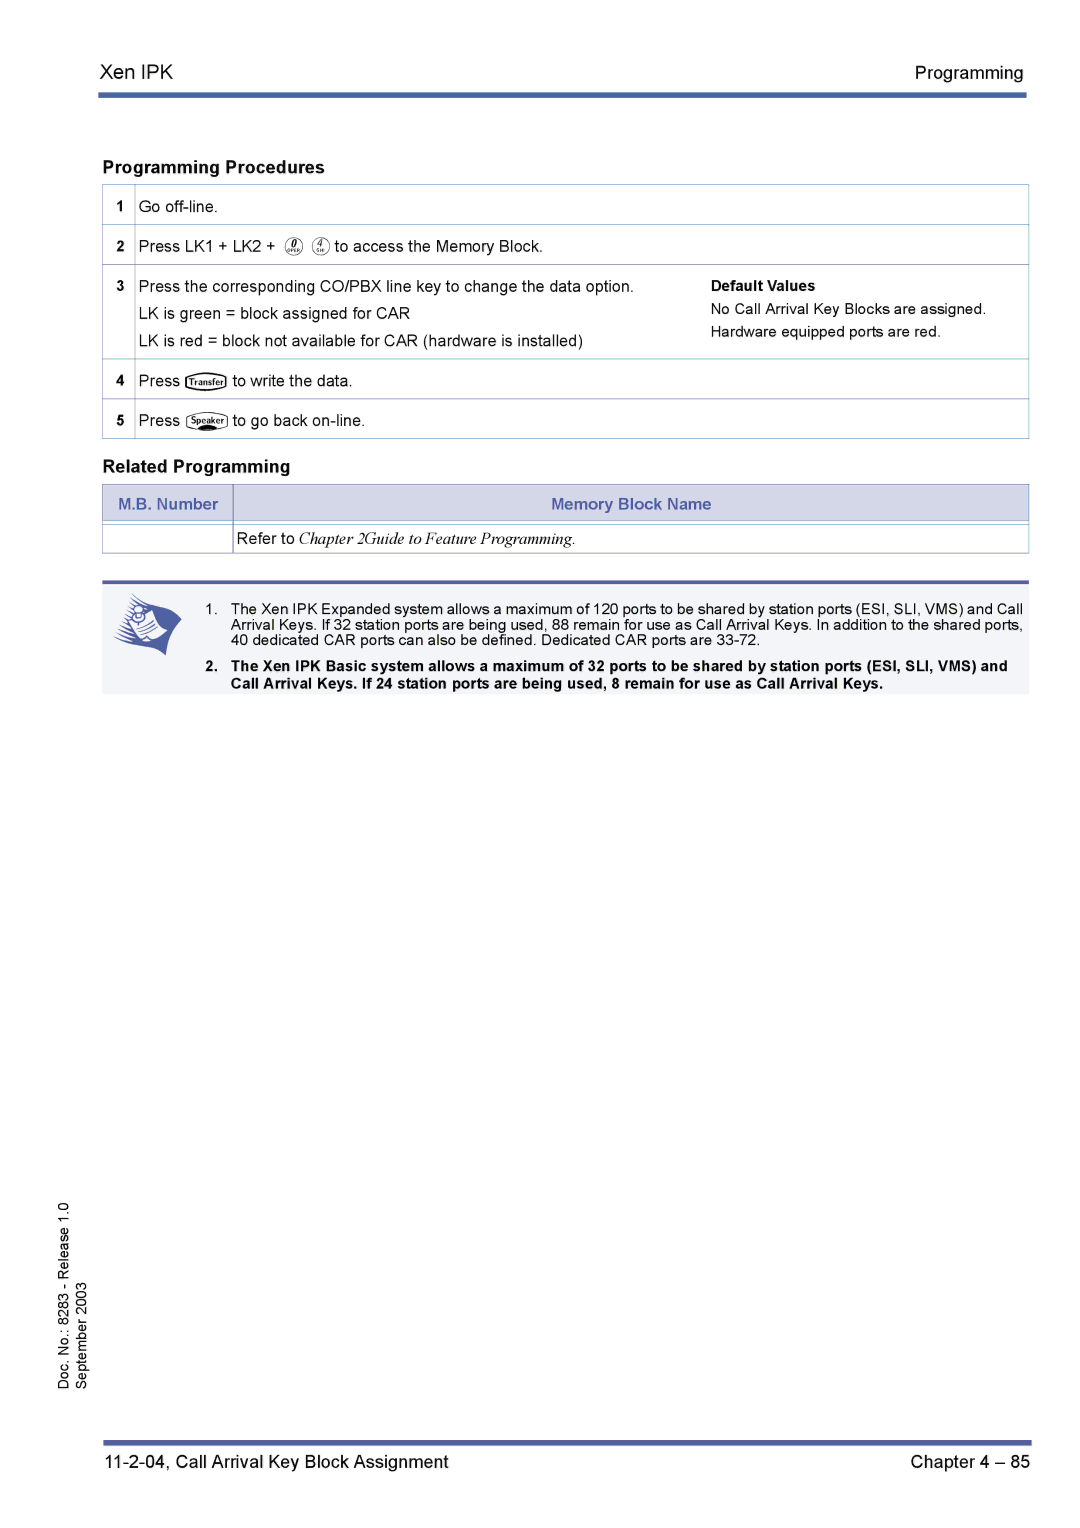 NEC R1000 manual Programming Procedures, Related Programming 